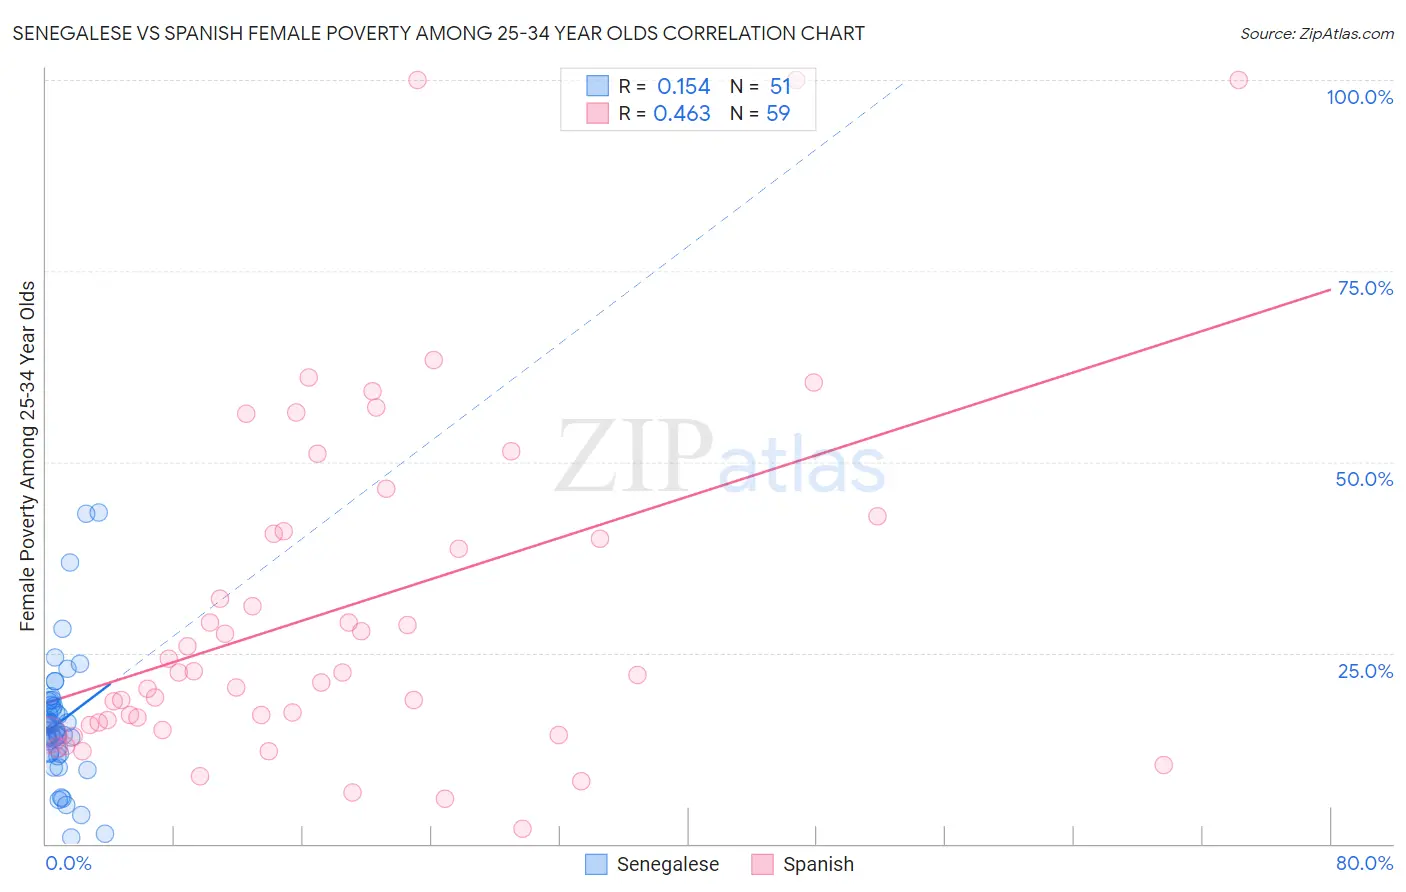 Senegalese vs Spanish Female Poverty Among 25-34 Year Olds